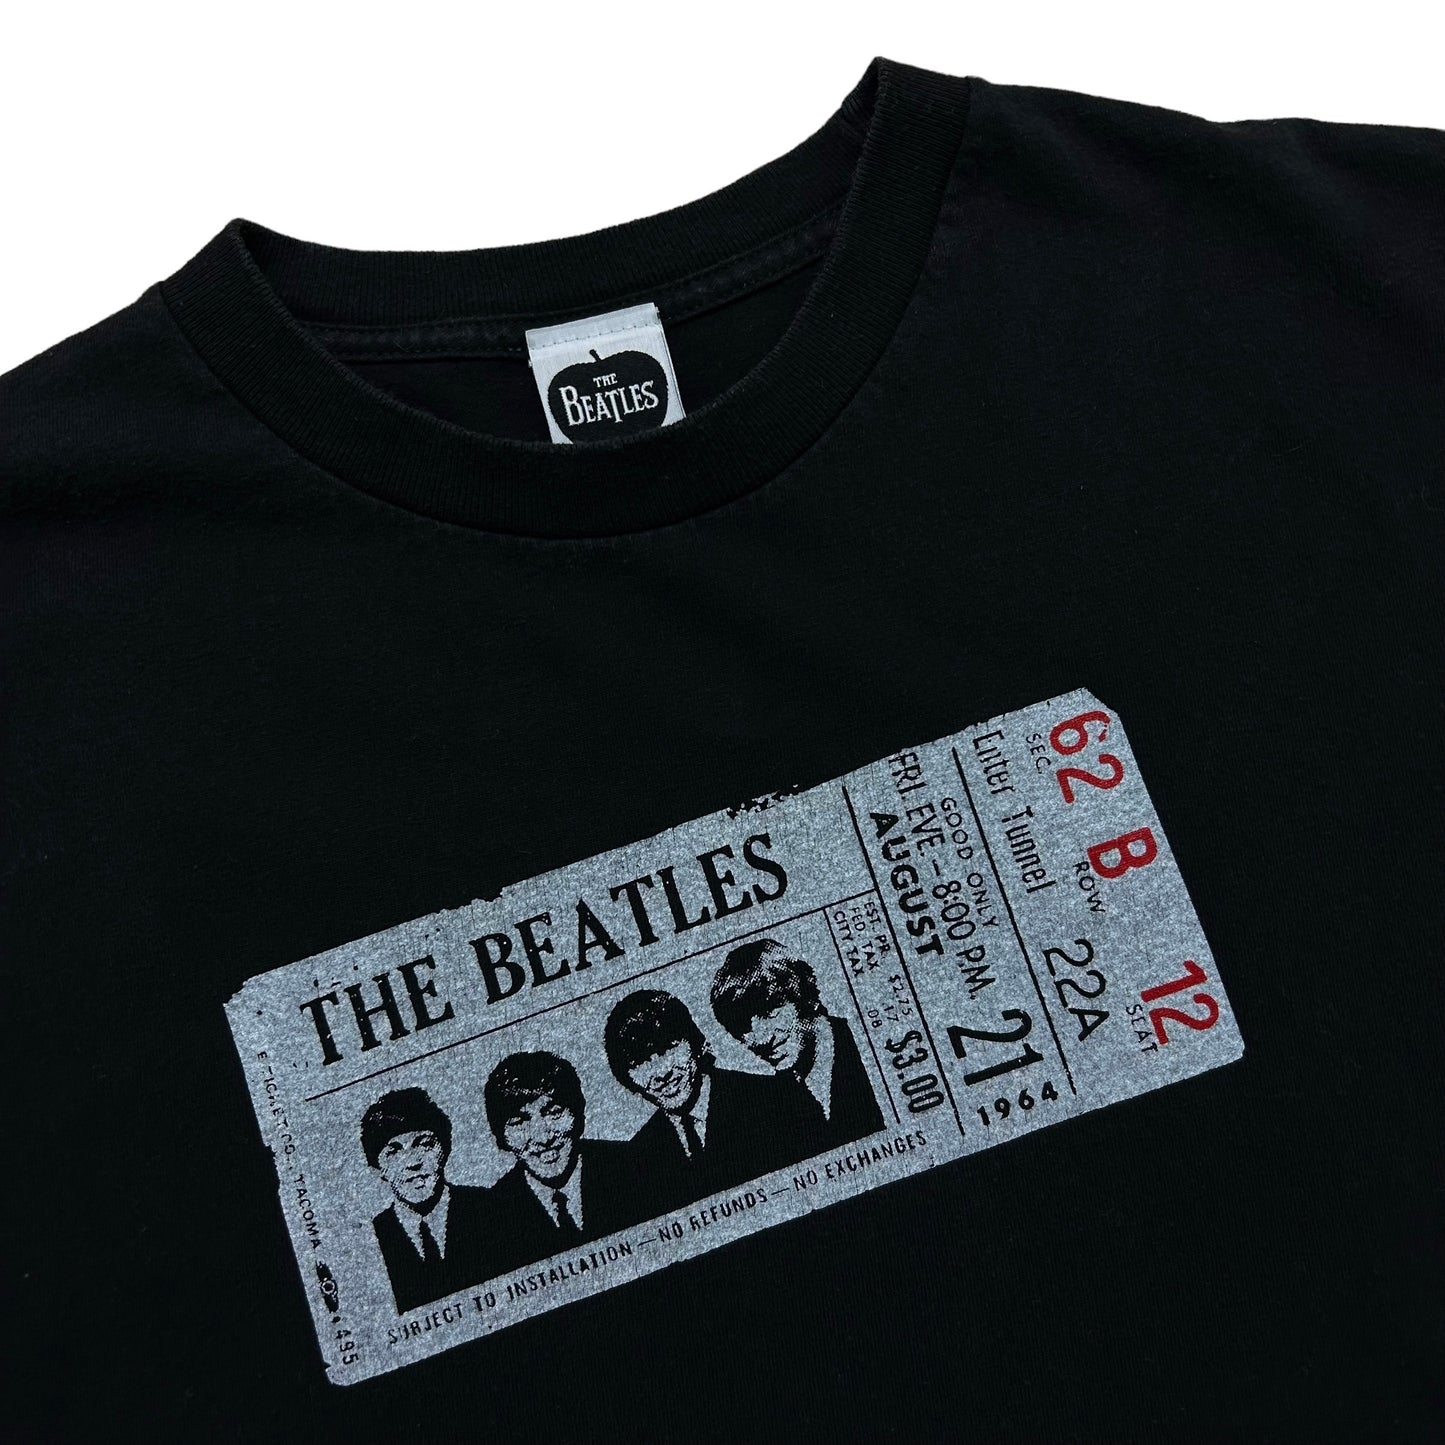 Y2K 2005 The Beatles Band Ticket Stub Black Graphic T-Shirt - Size Medium